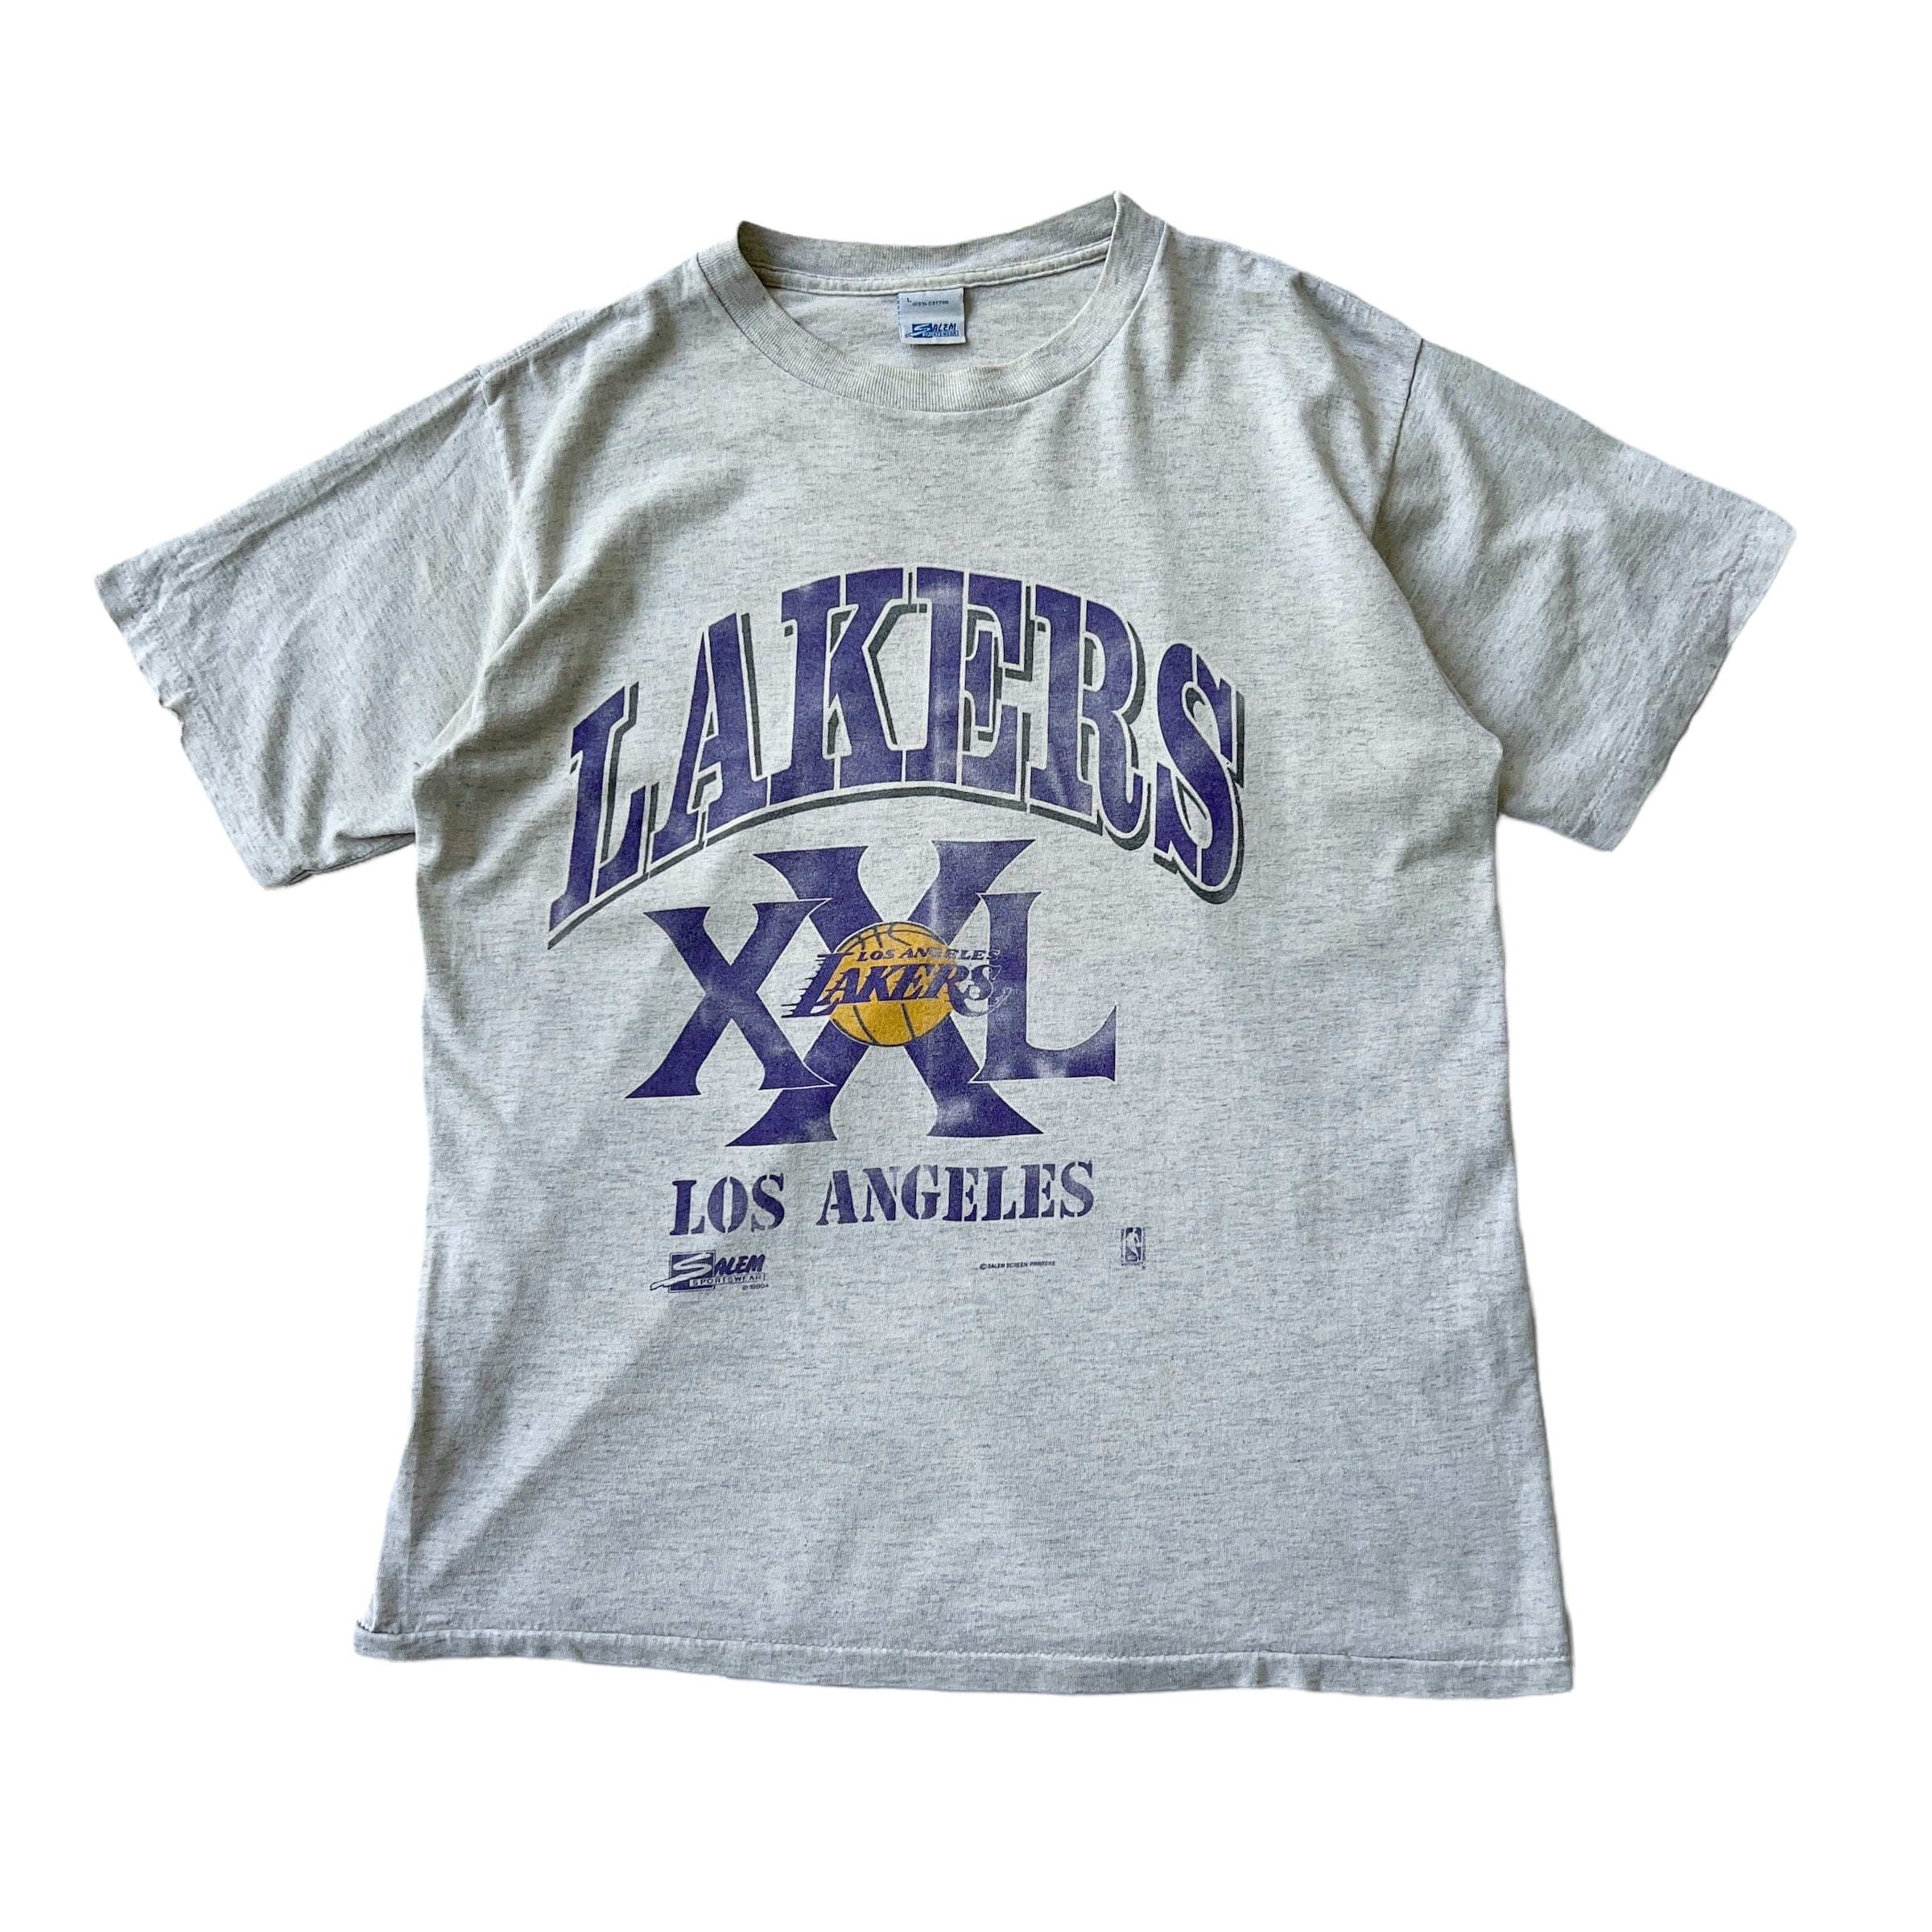 VINTAGE 90s SALEM SPORTSWEAR NBA CHARLES BARKLEY T-SHIRT size L